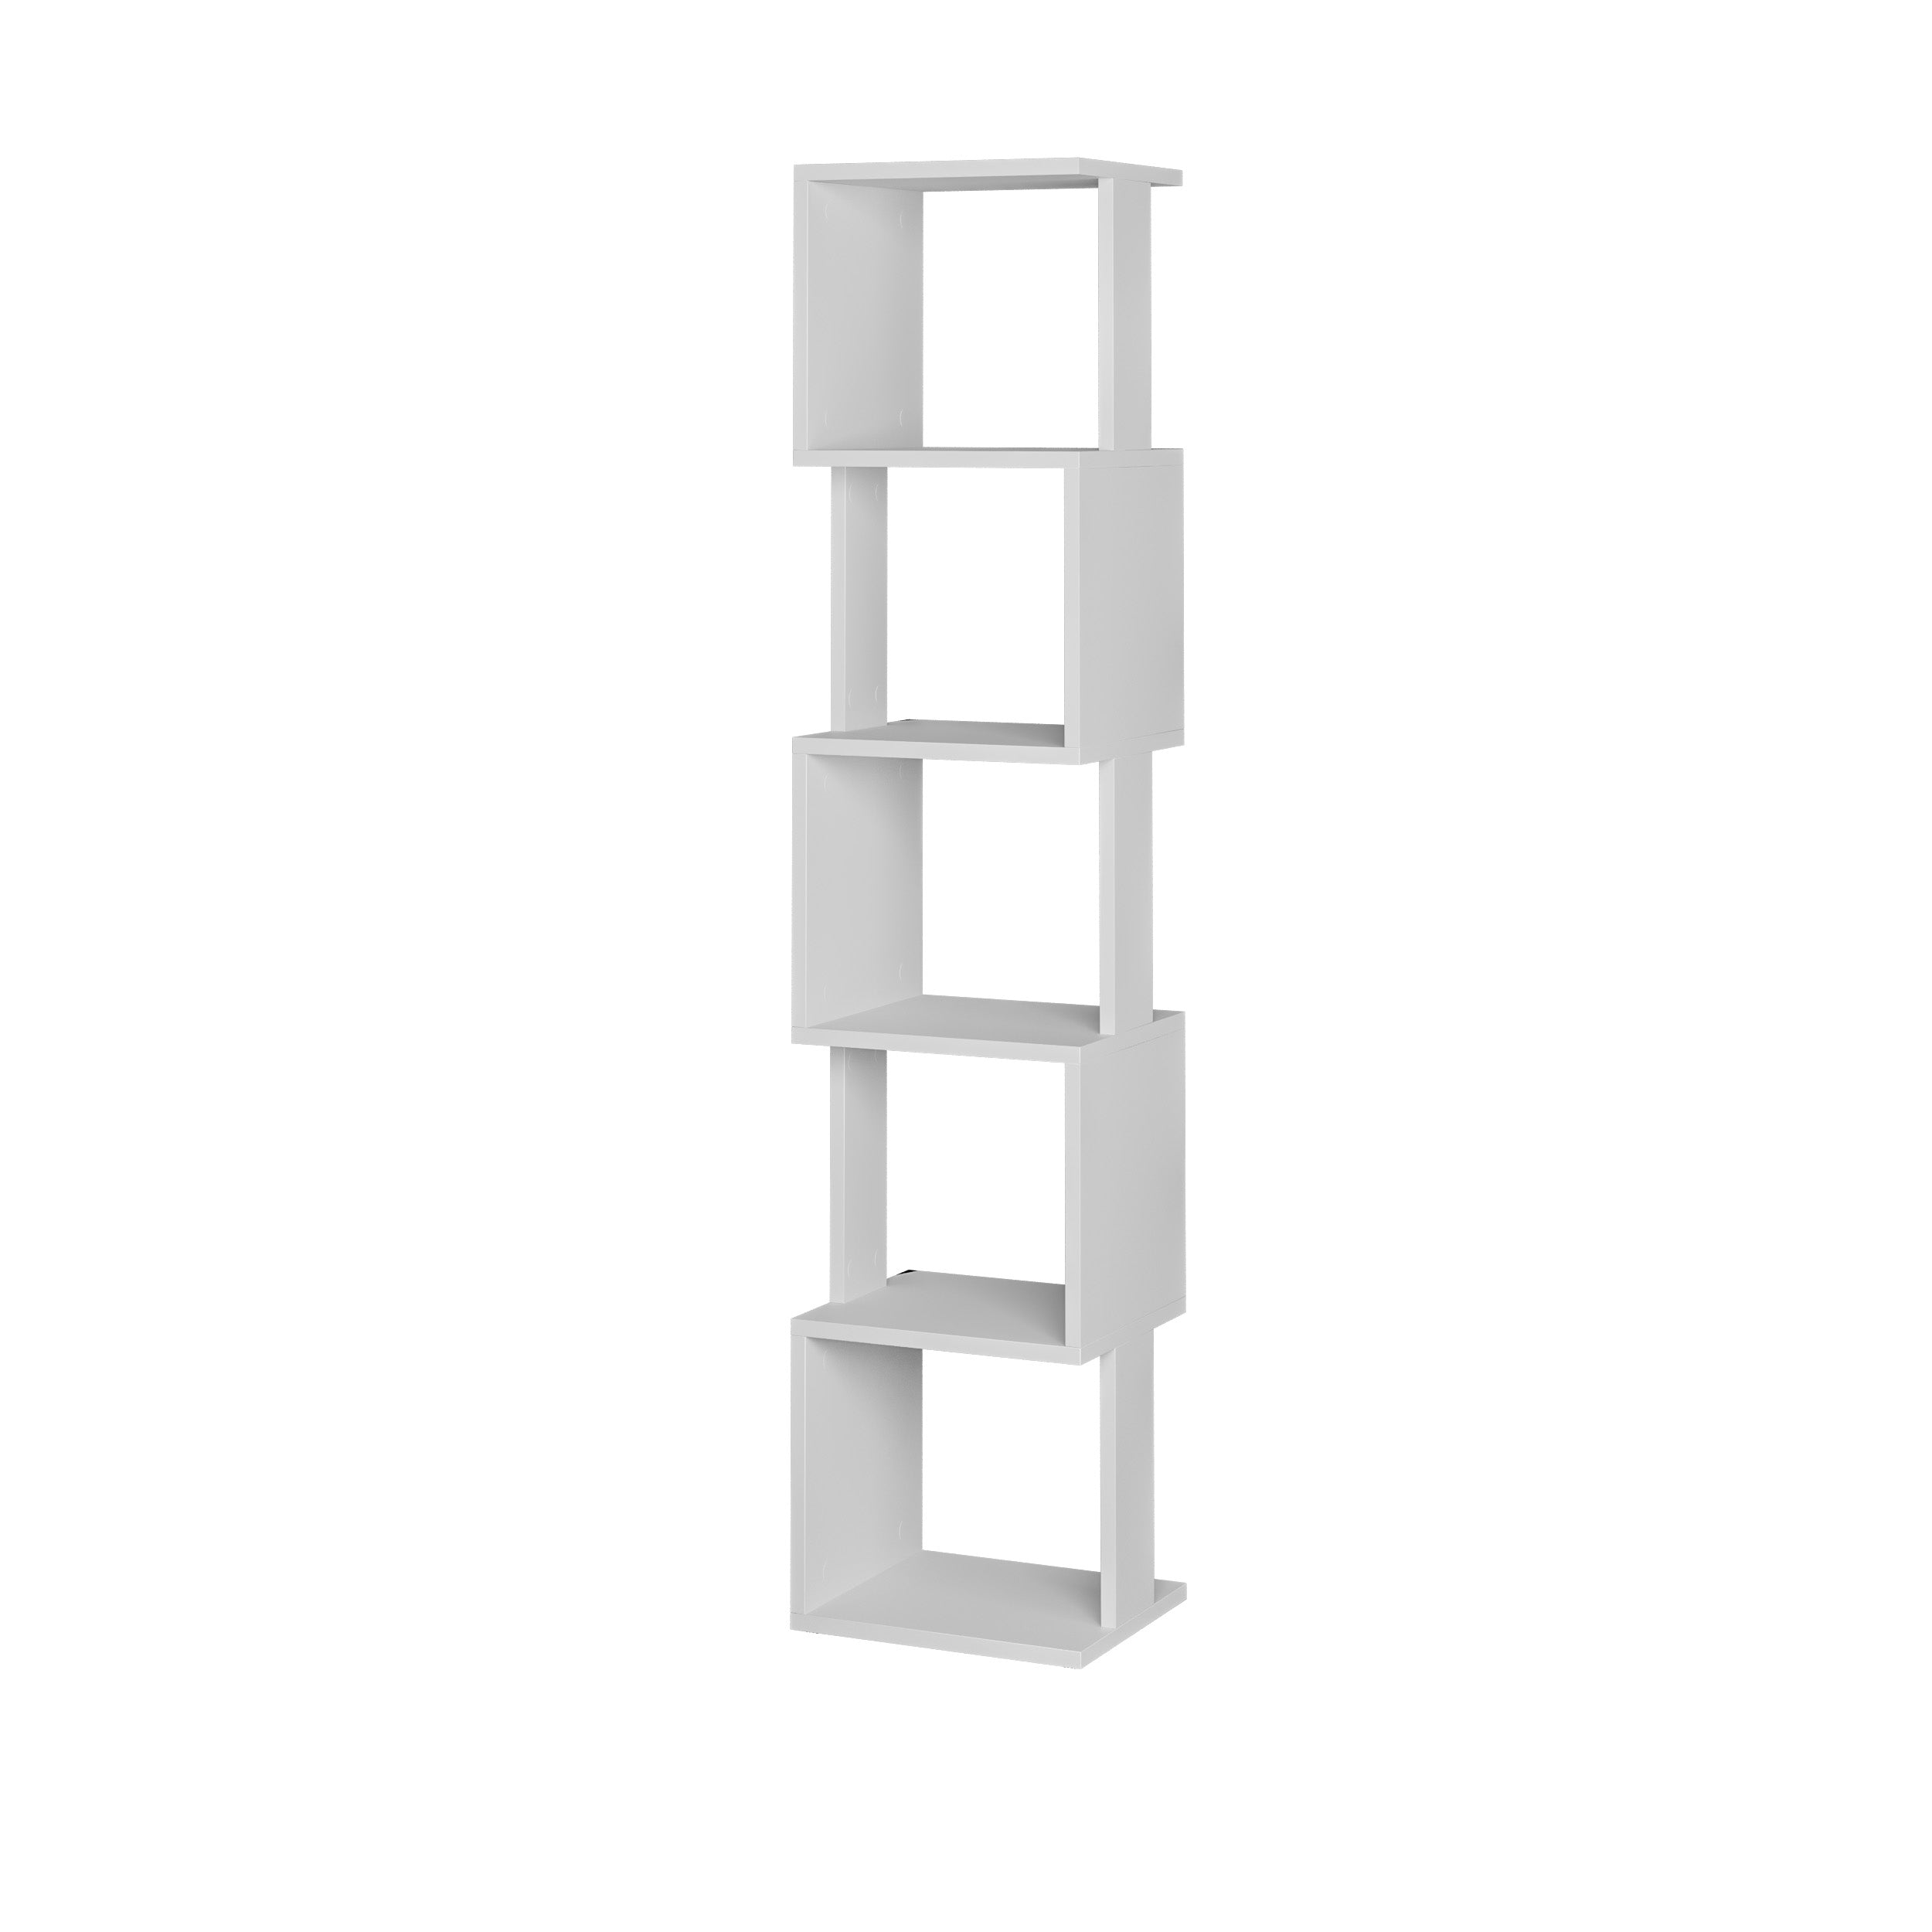 Piri Modern Bookcase Display Unit Tall 161cm - Decortie